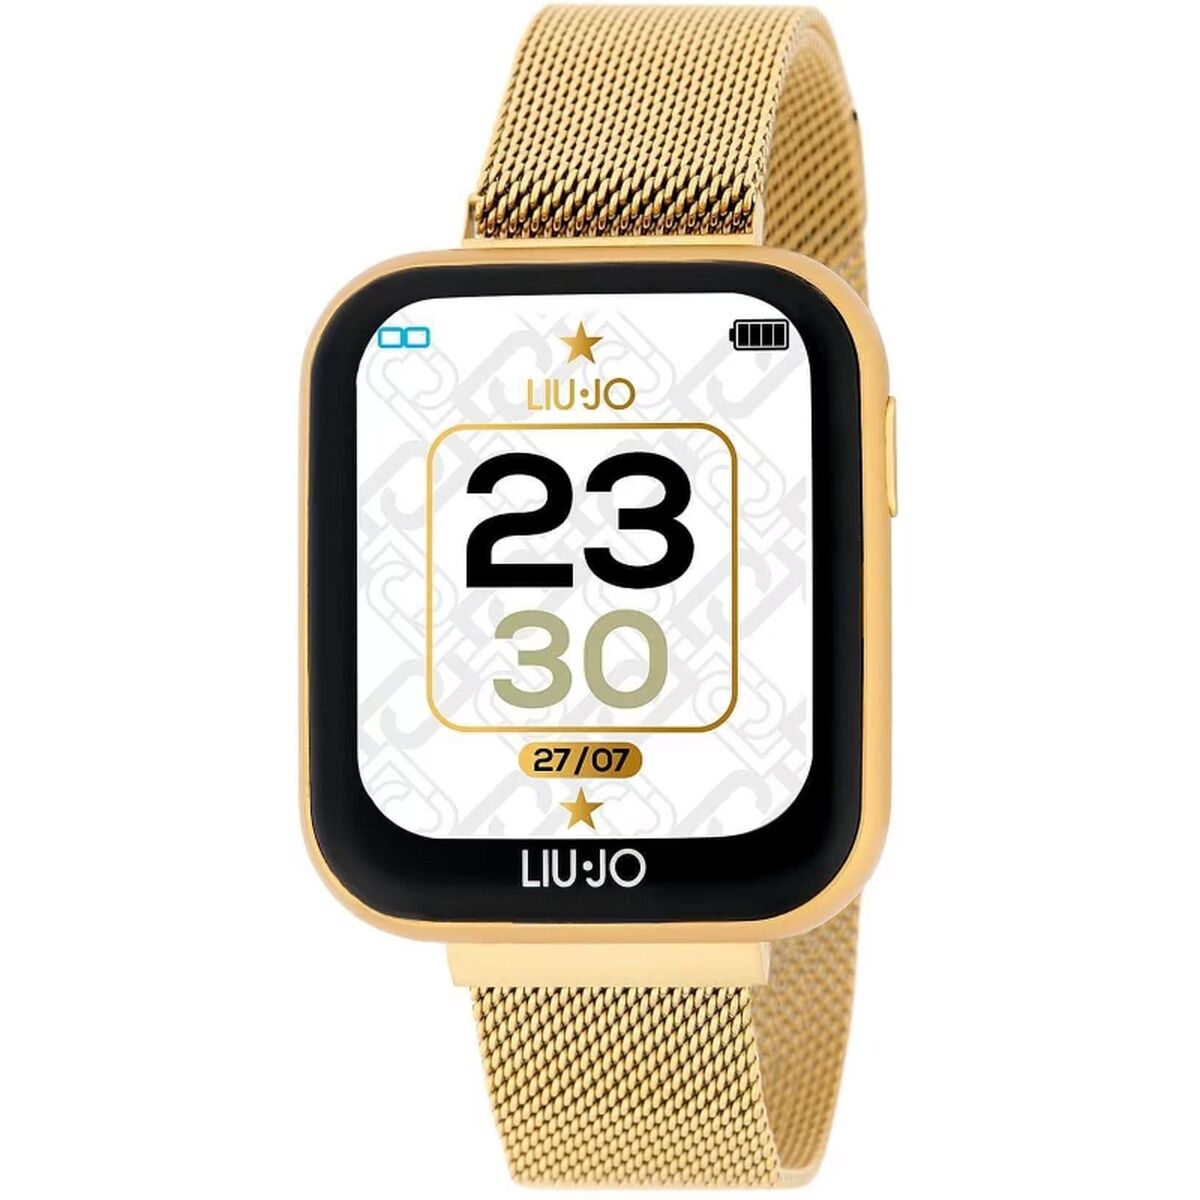 Kaufe Smartwatch LIU JO SWLJ053 bei AWK Flagship um € 191.00